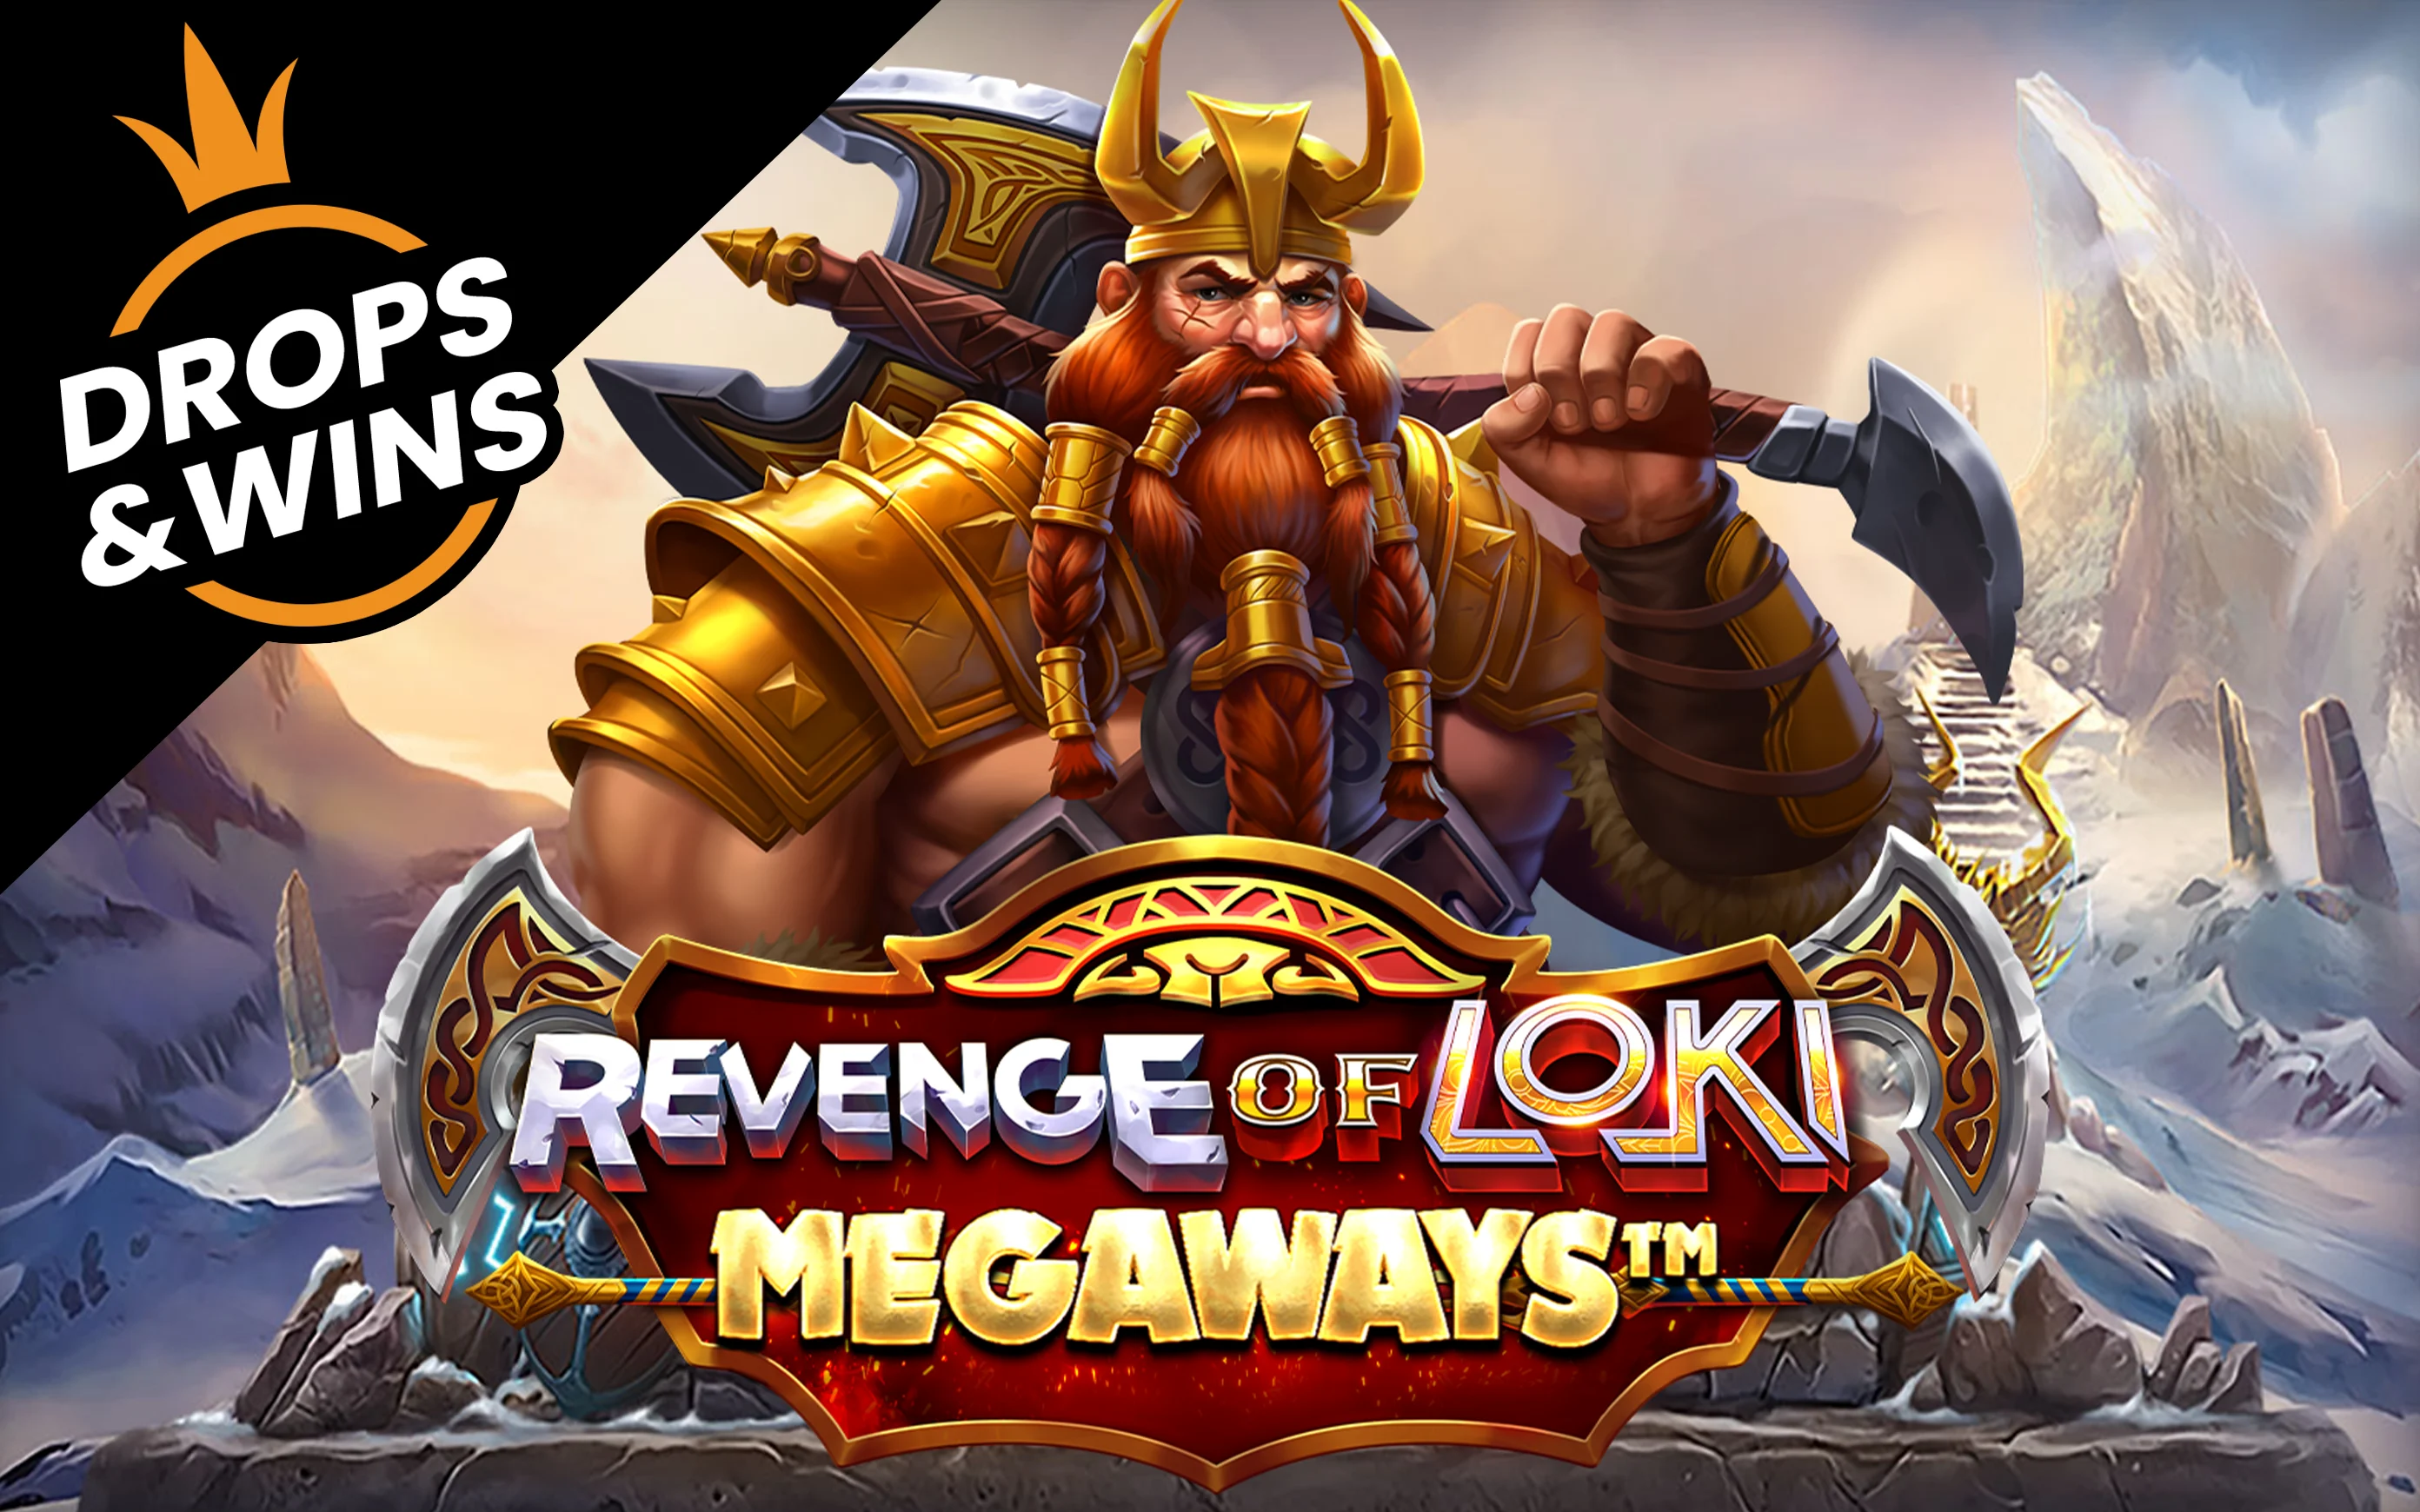 Gioca a Revenge of Loki Megaways sul casino online Starcasino.be